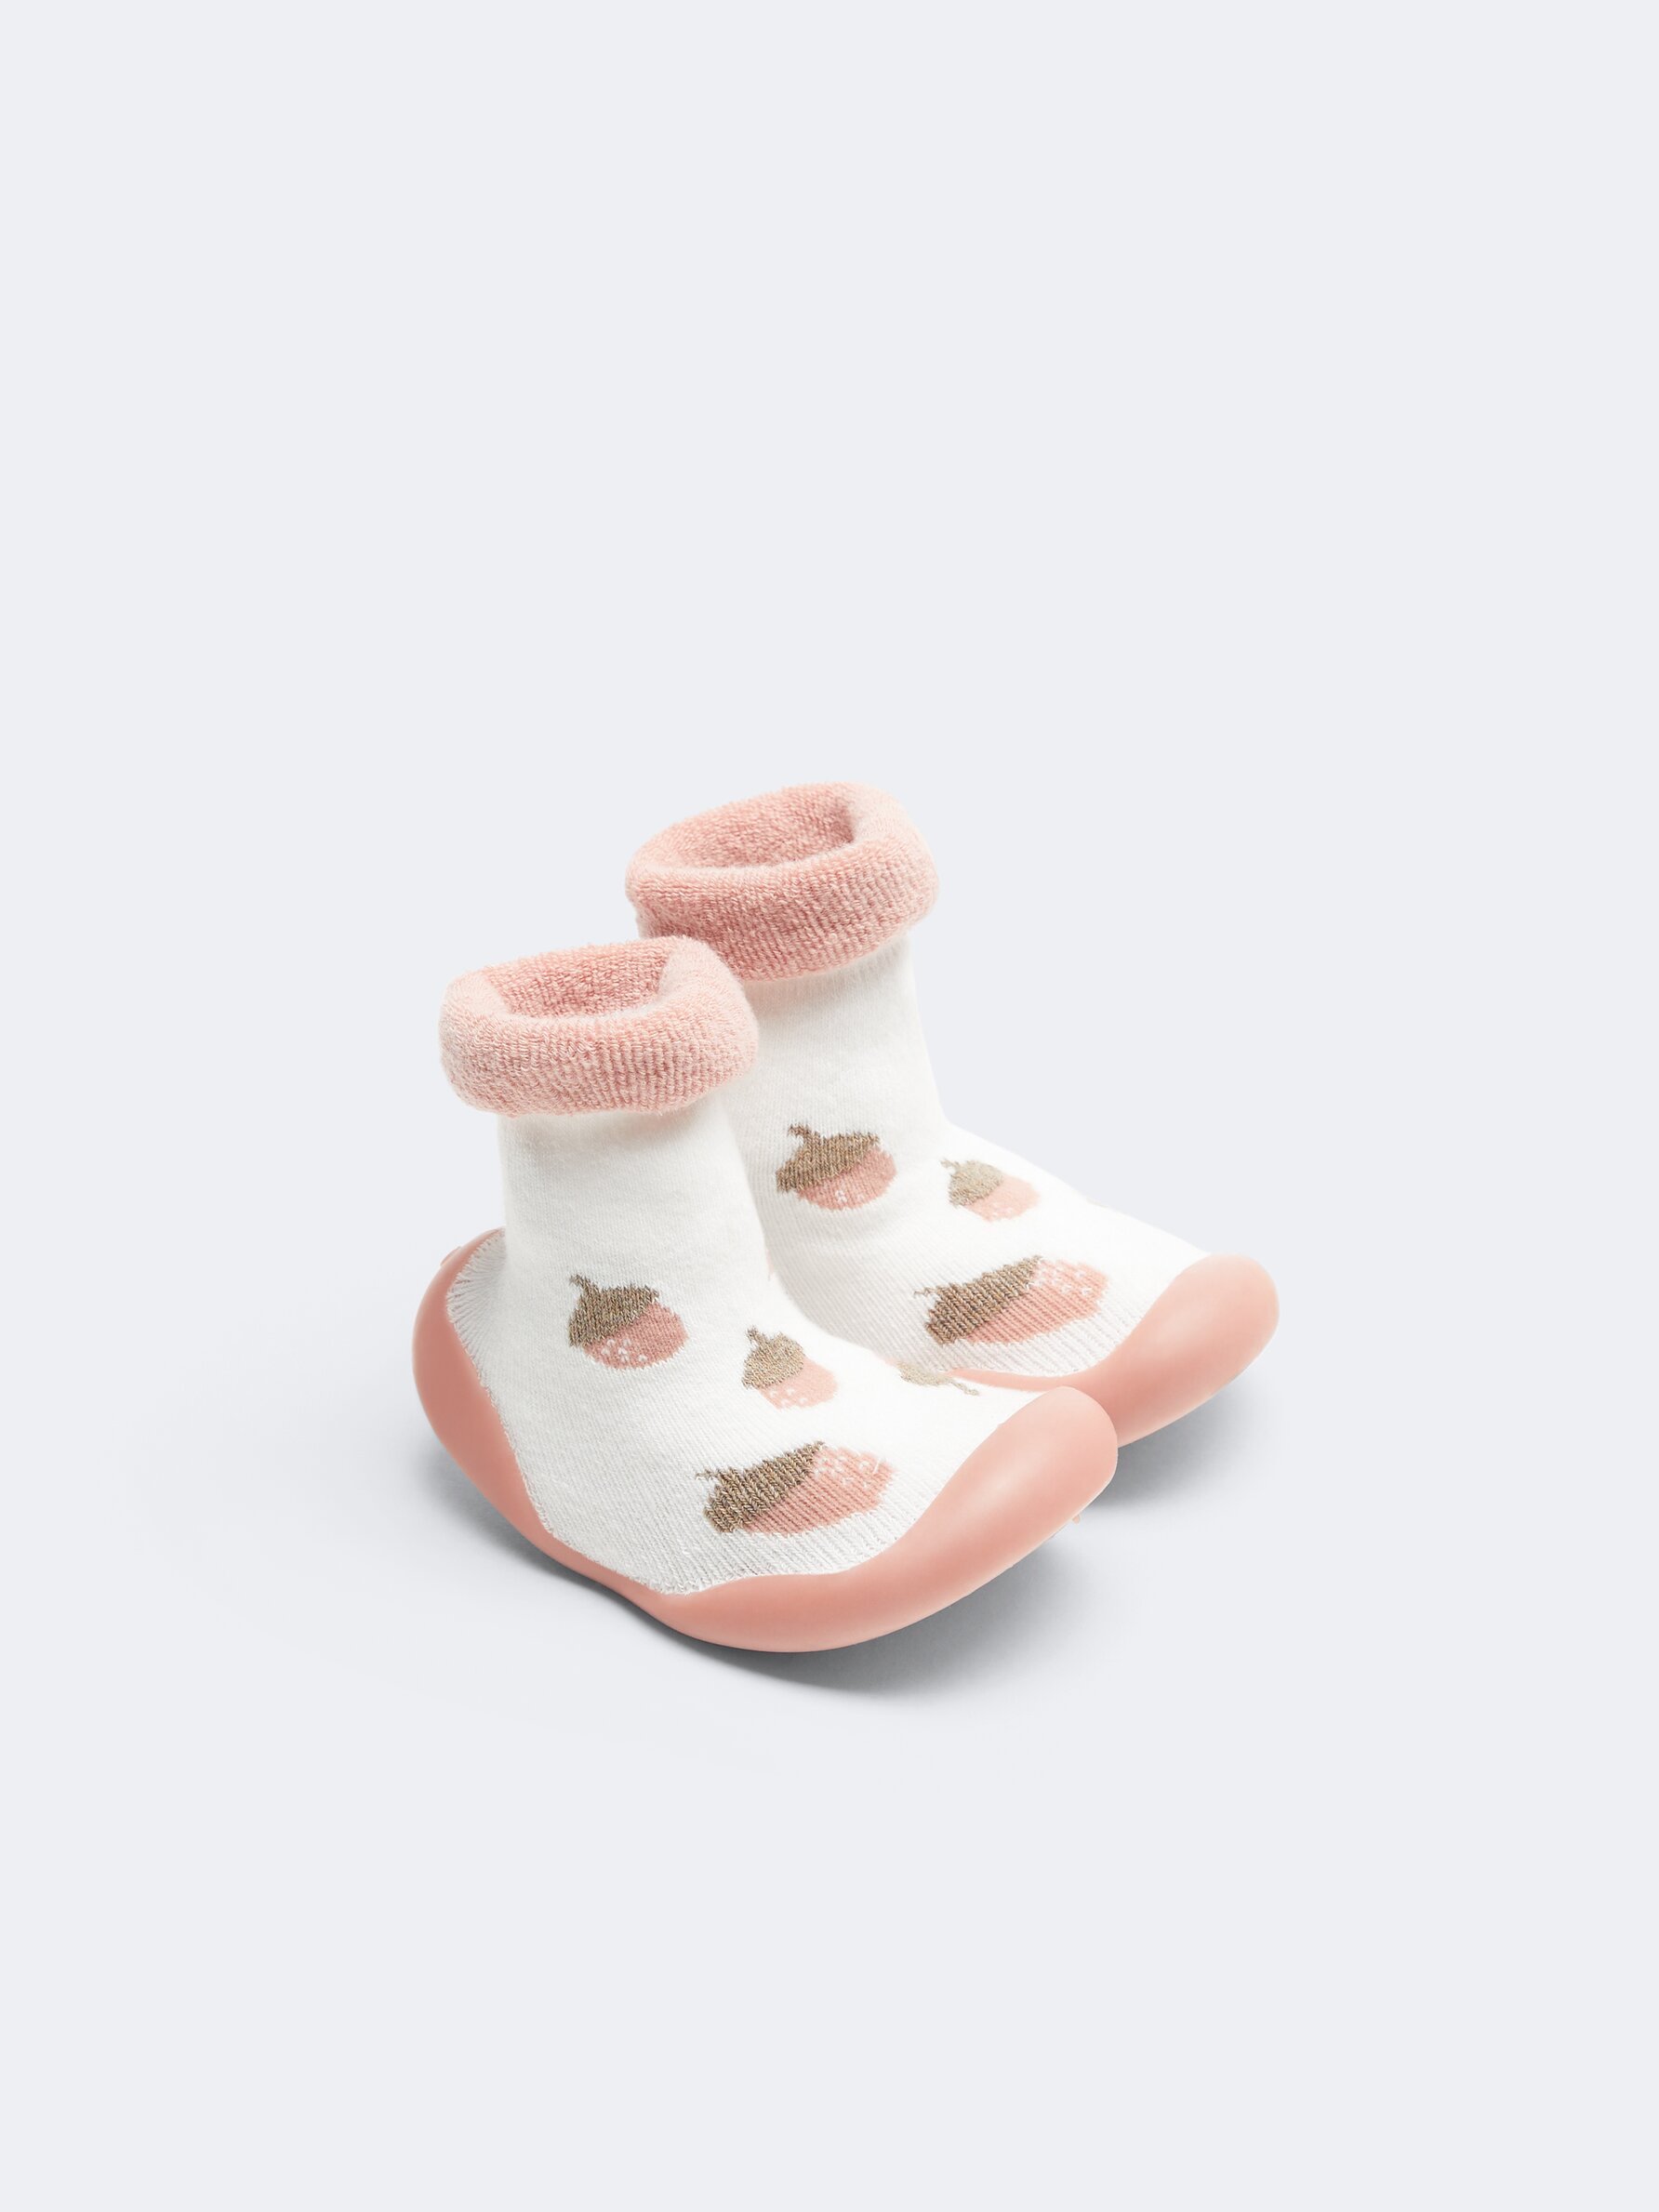 Toddler Slipper Socks with Rubber Soles